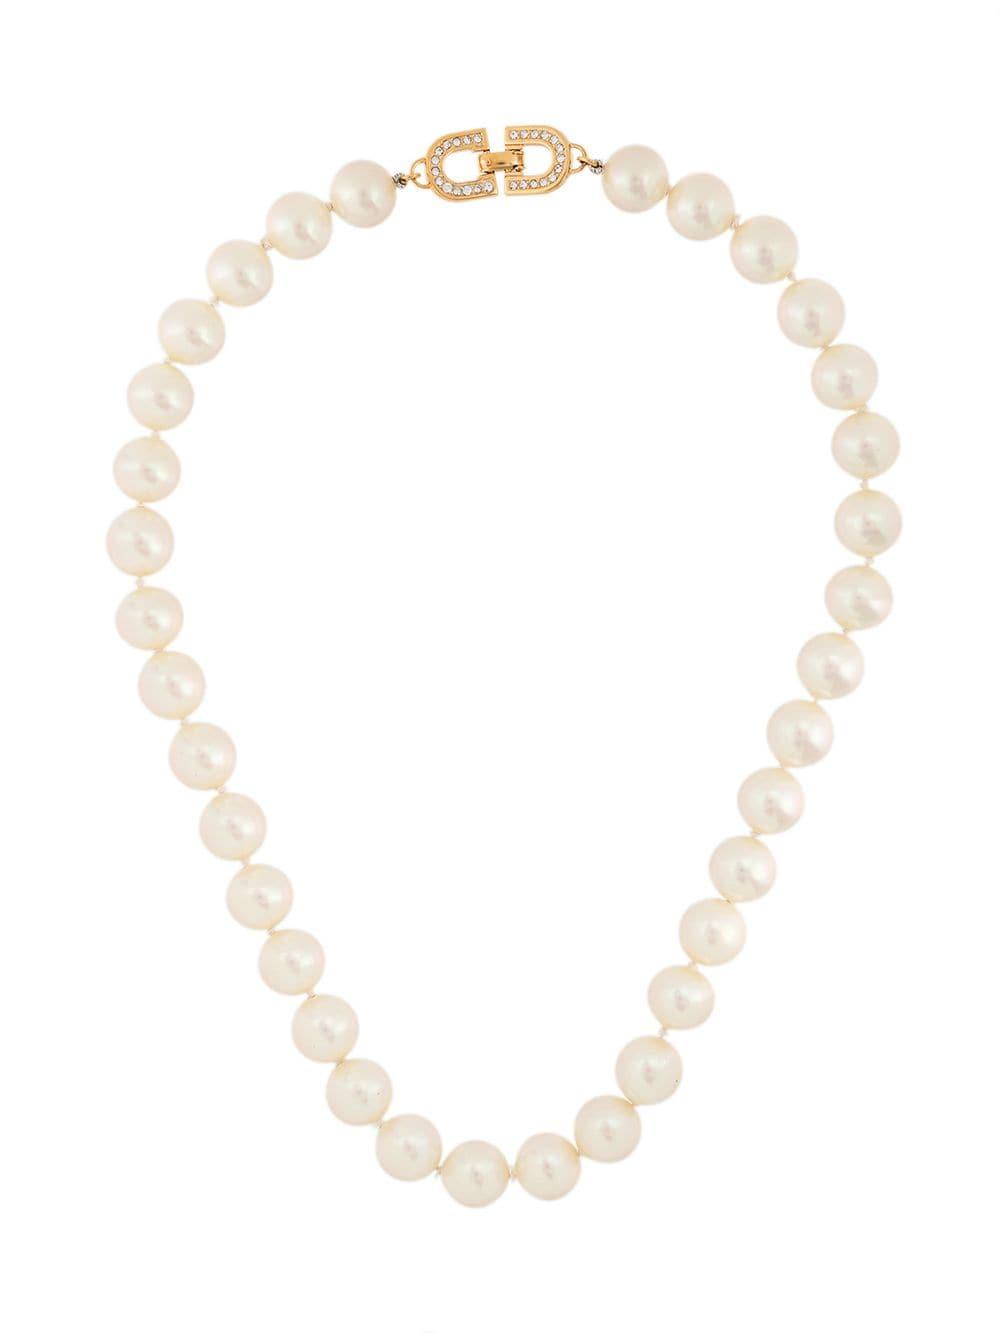 Christian Dior  Vintage oversized pearl necklace  4element